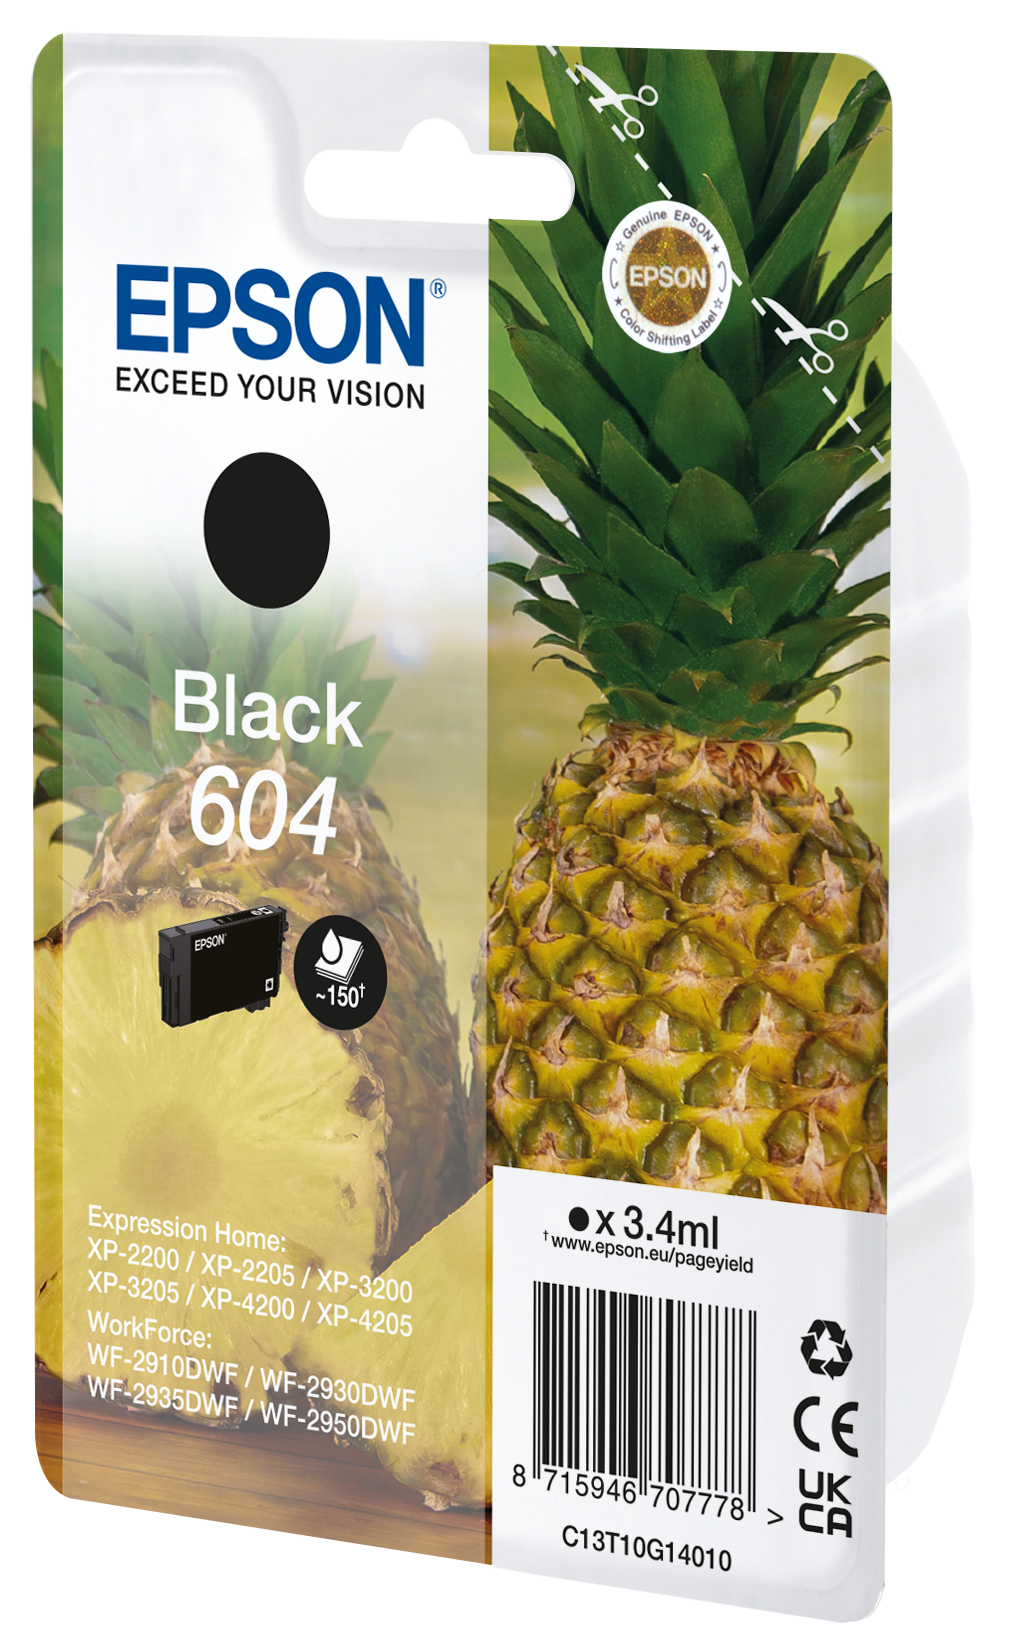 Epson 604 Ink Cartridge - Black